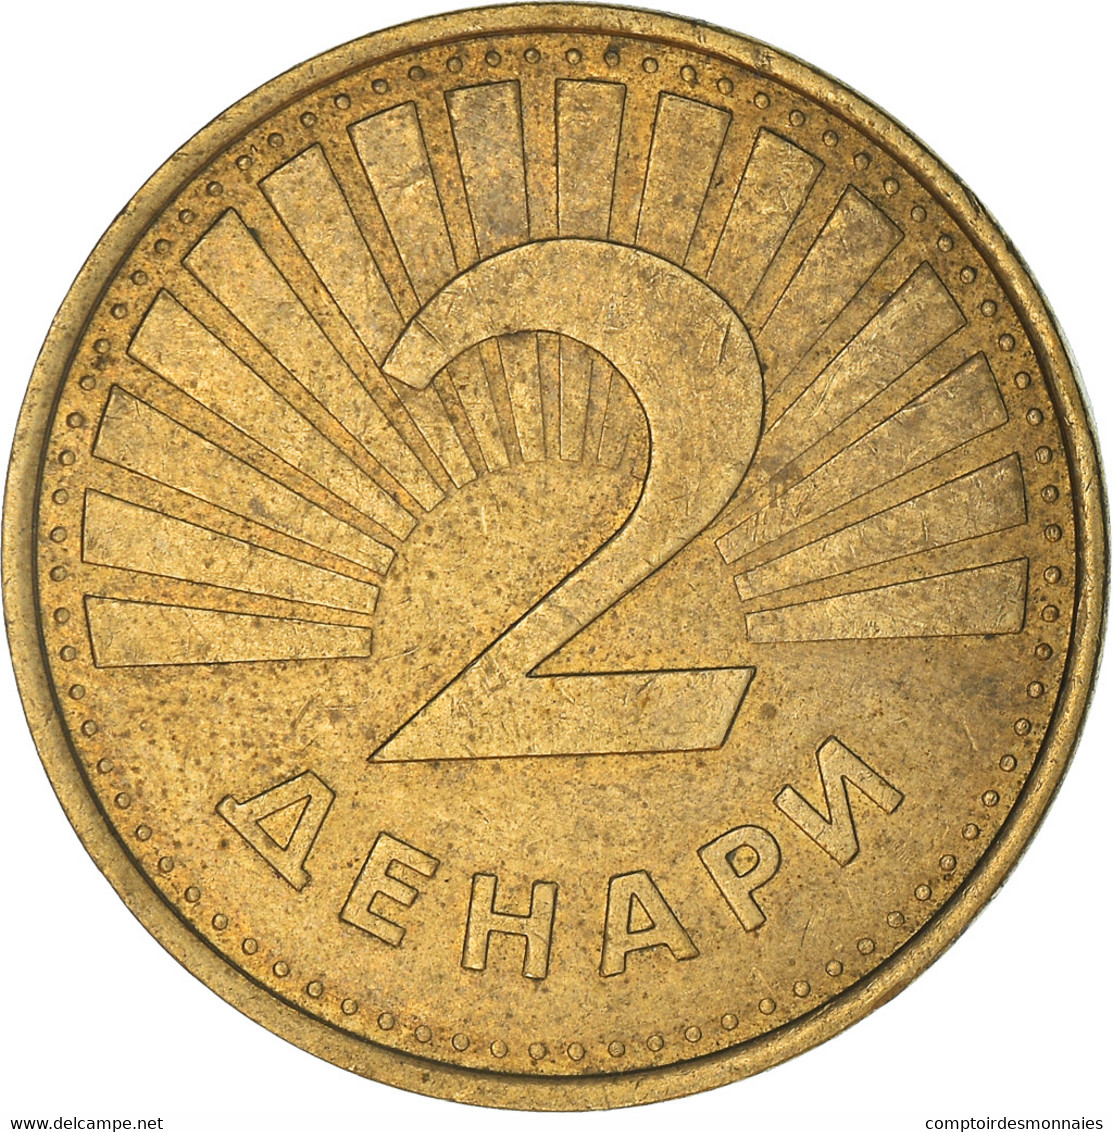 Monnaie, Macédoine, 2 Denari, 2006, TTB, Laiton, KM:3 - North Macedonia